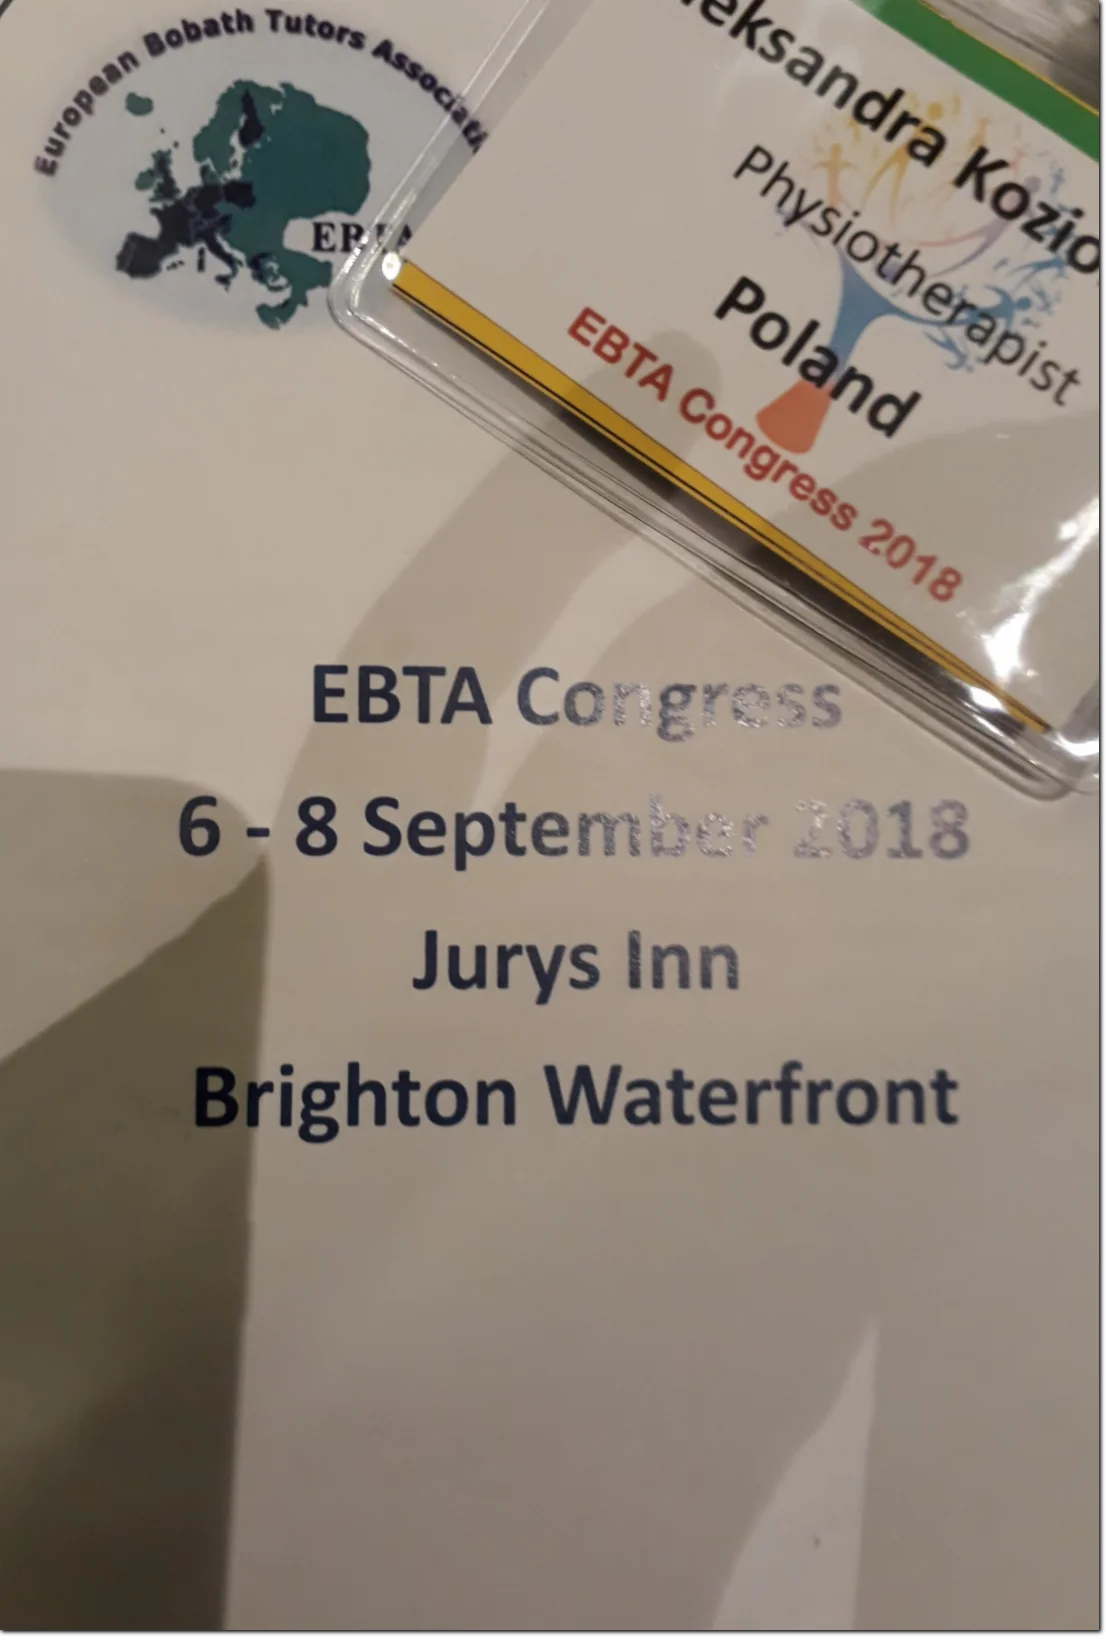 EBTA Congress, 6-8 September 2018, Brighton/ London